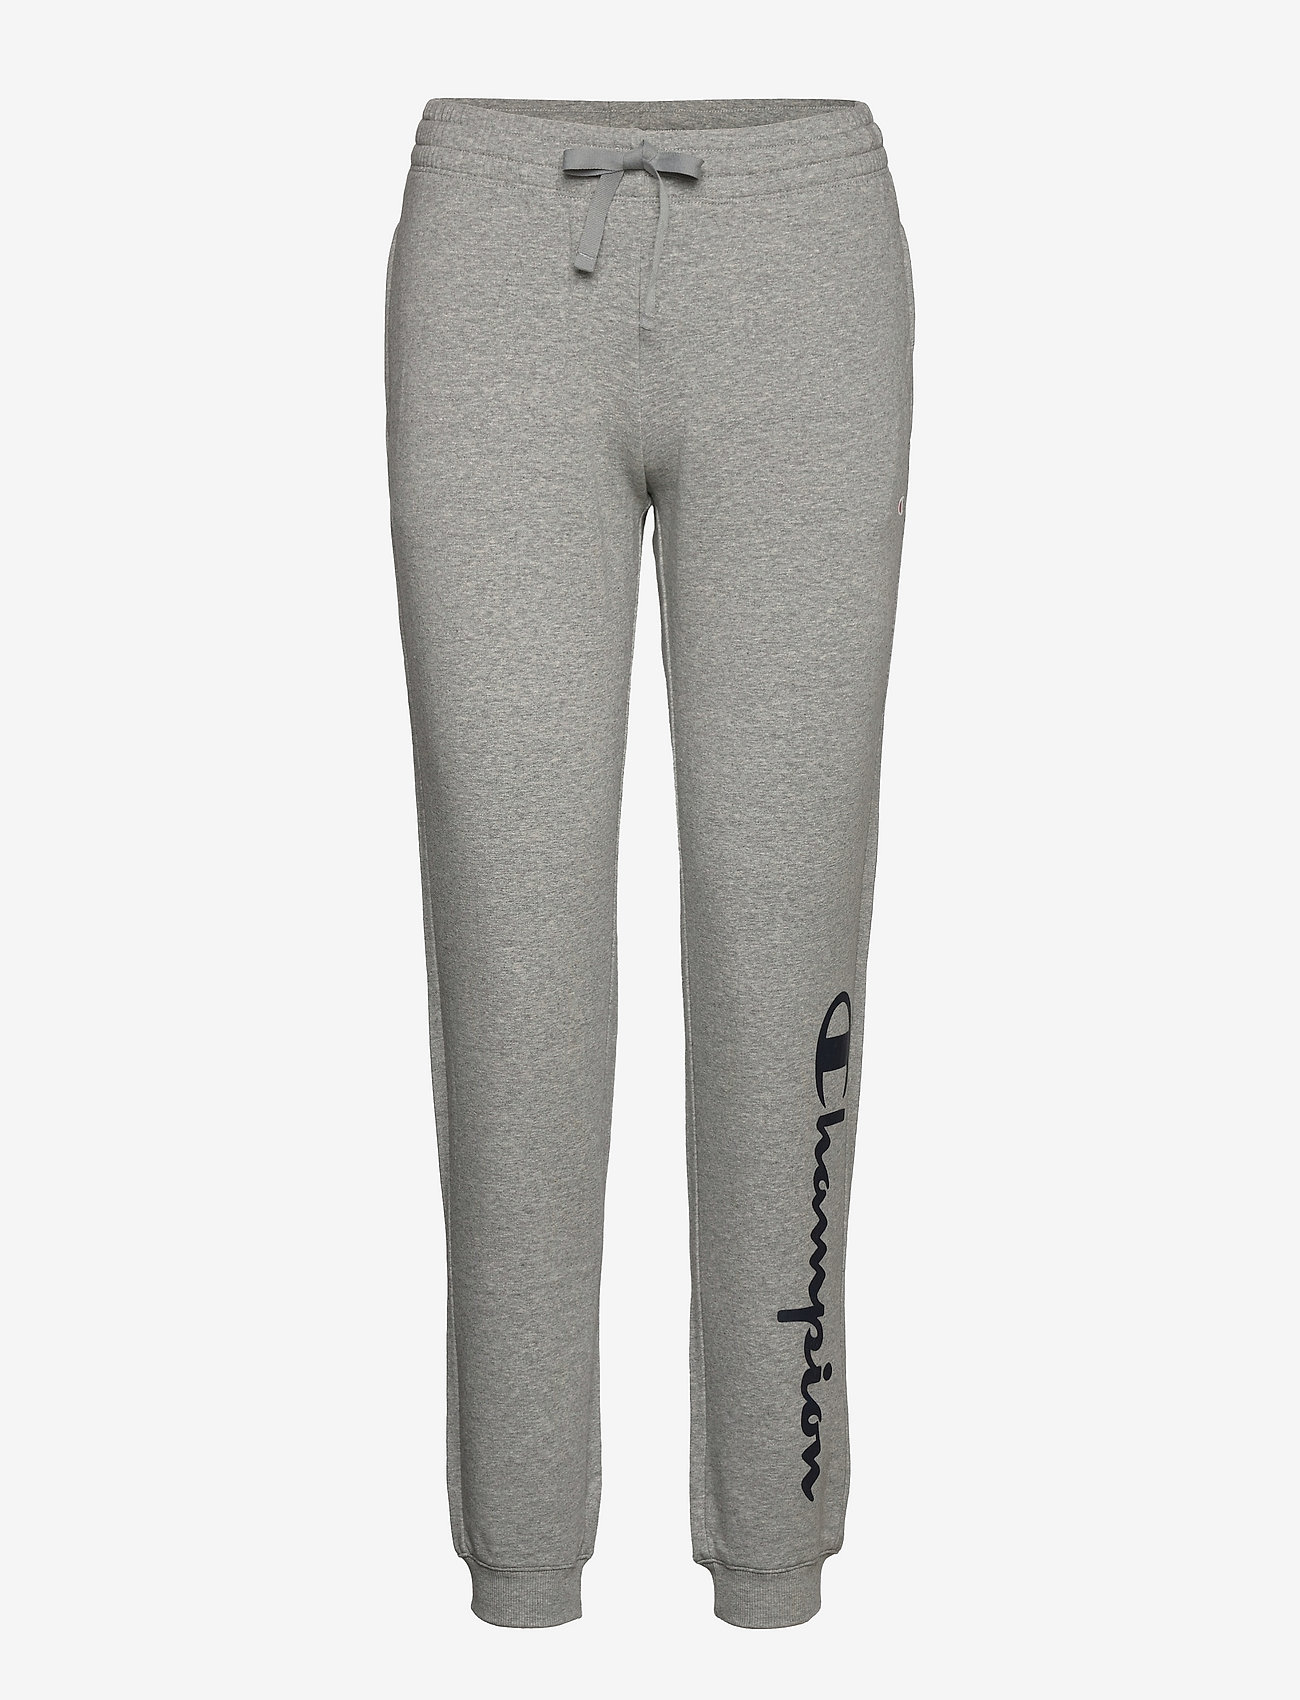 Champion - Rib Cuff Pants - collegehousut - gray melange light - 0